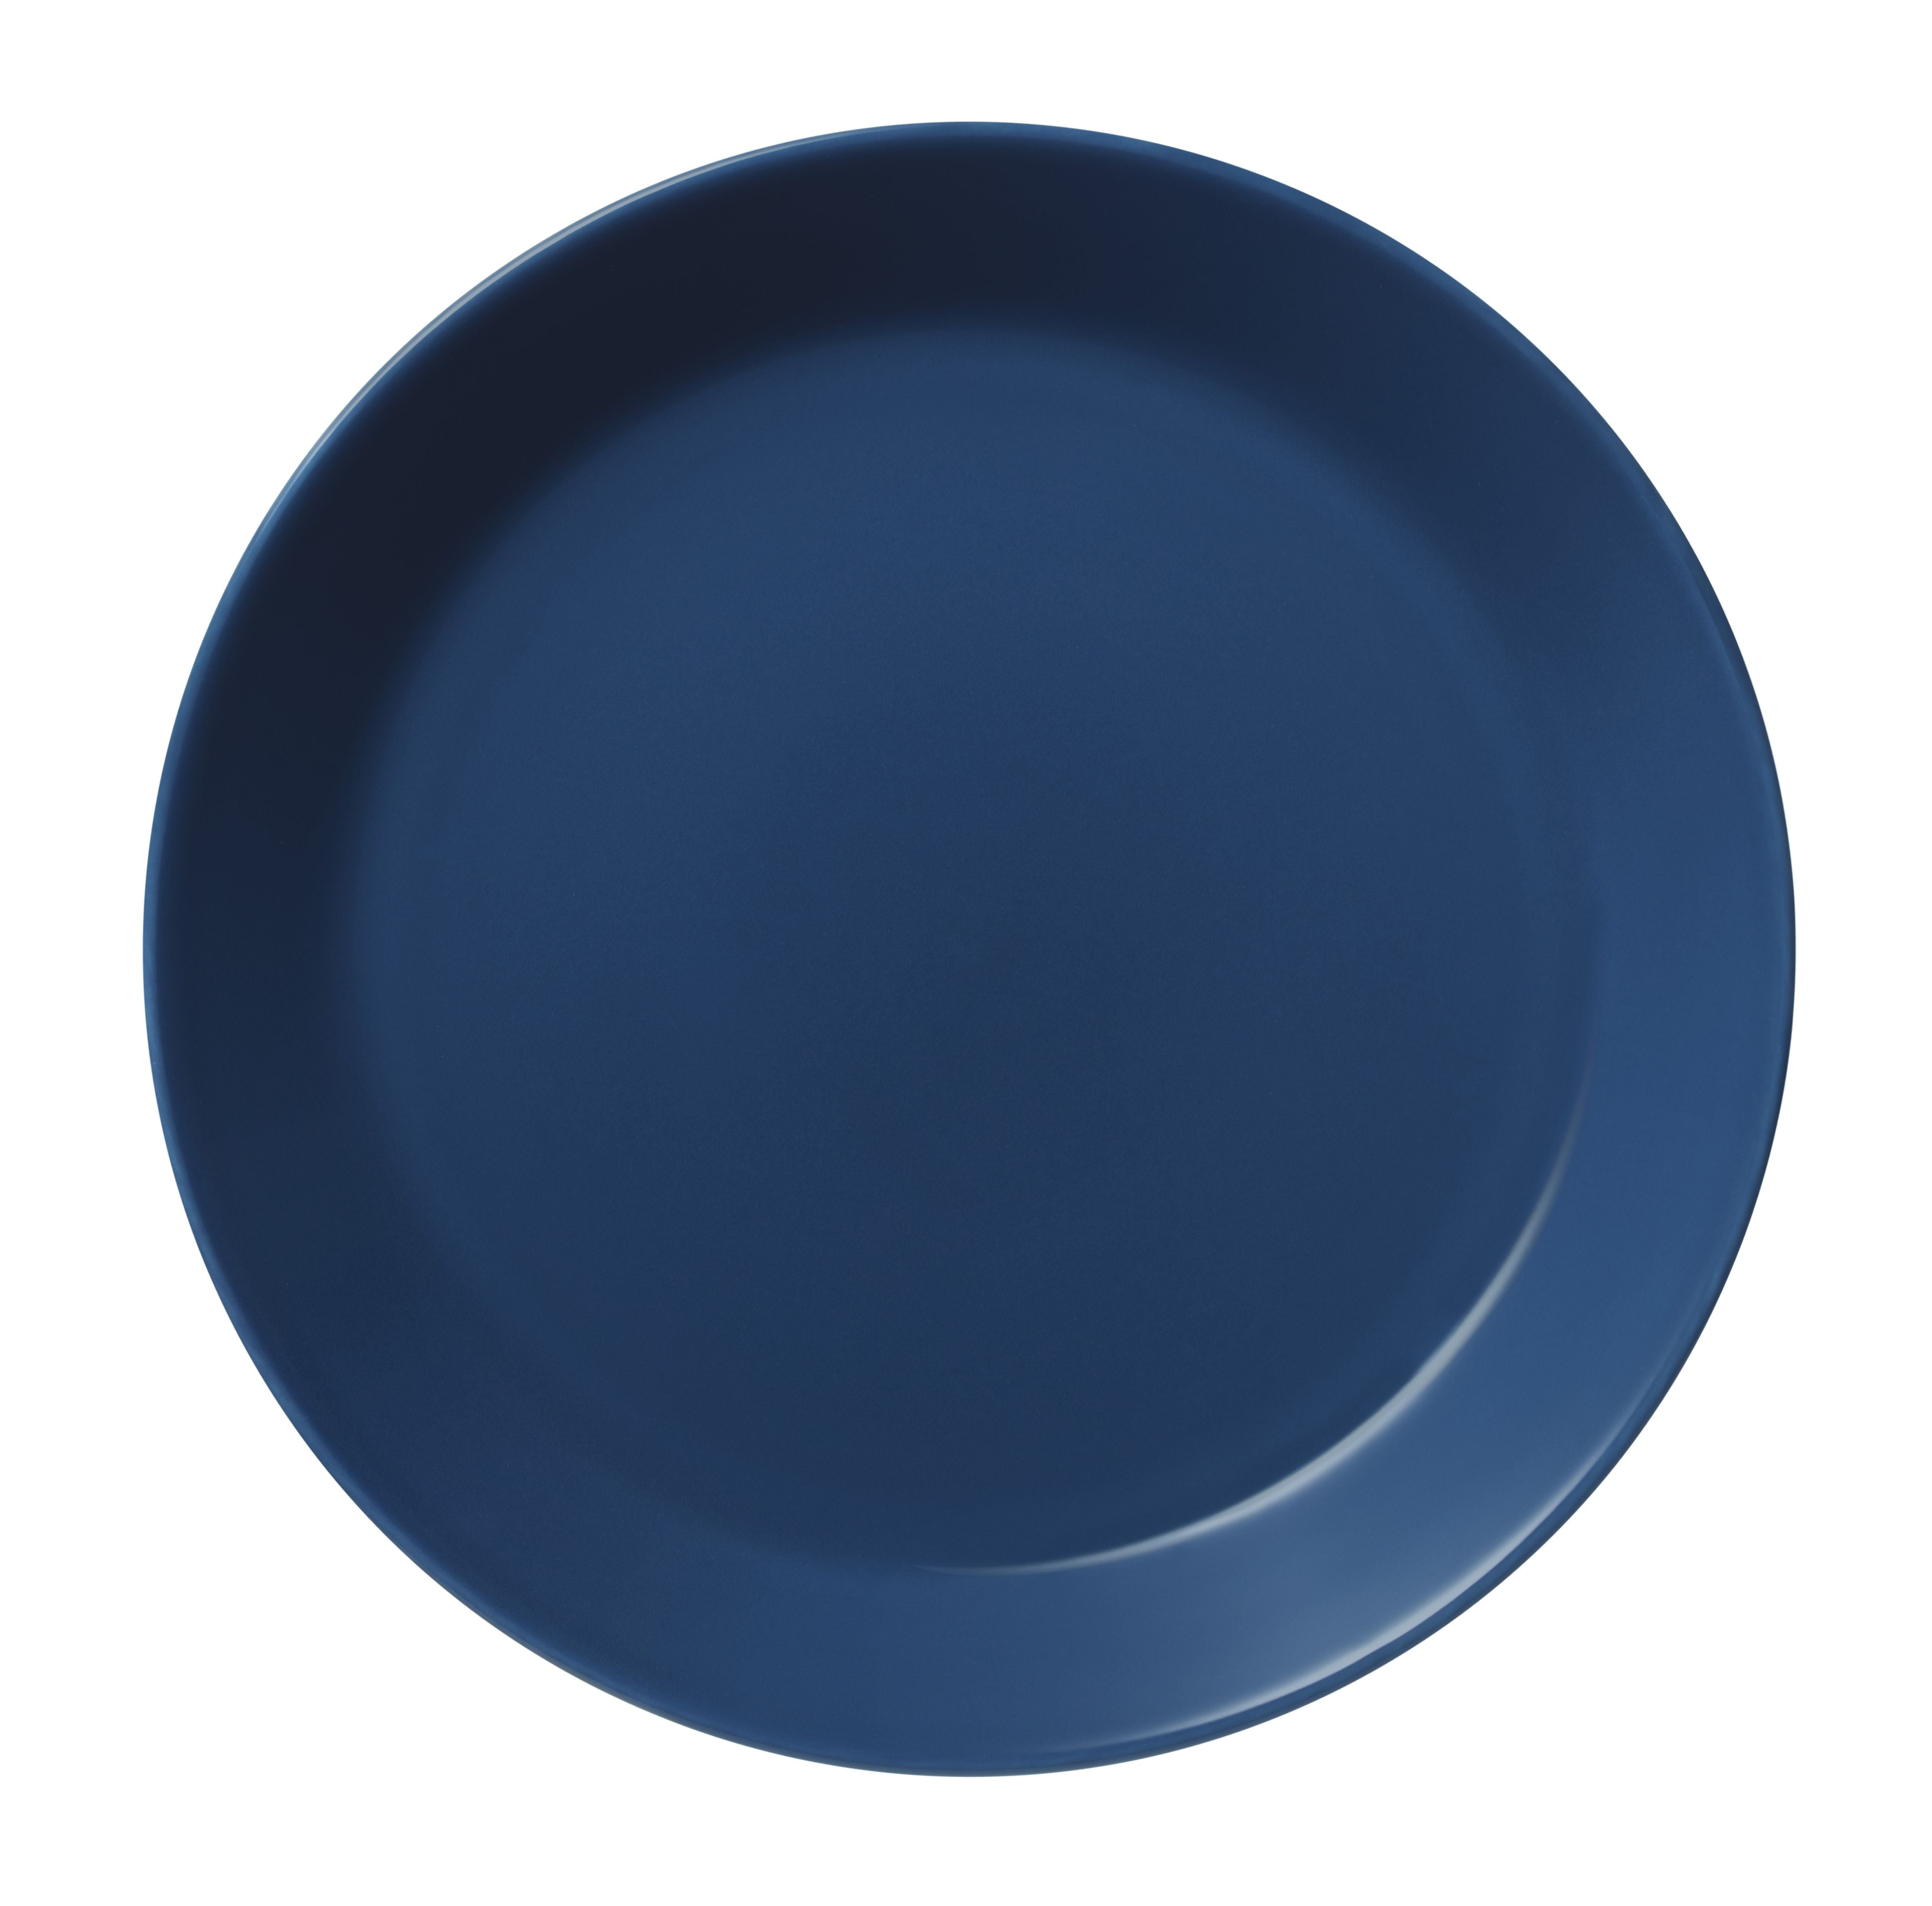 Iittala Plaque teema 23cm, bleu vintage